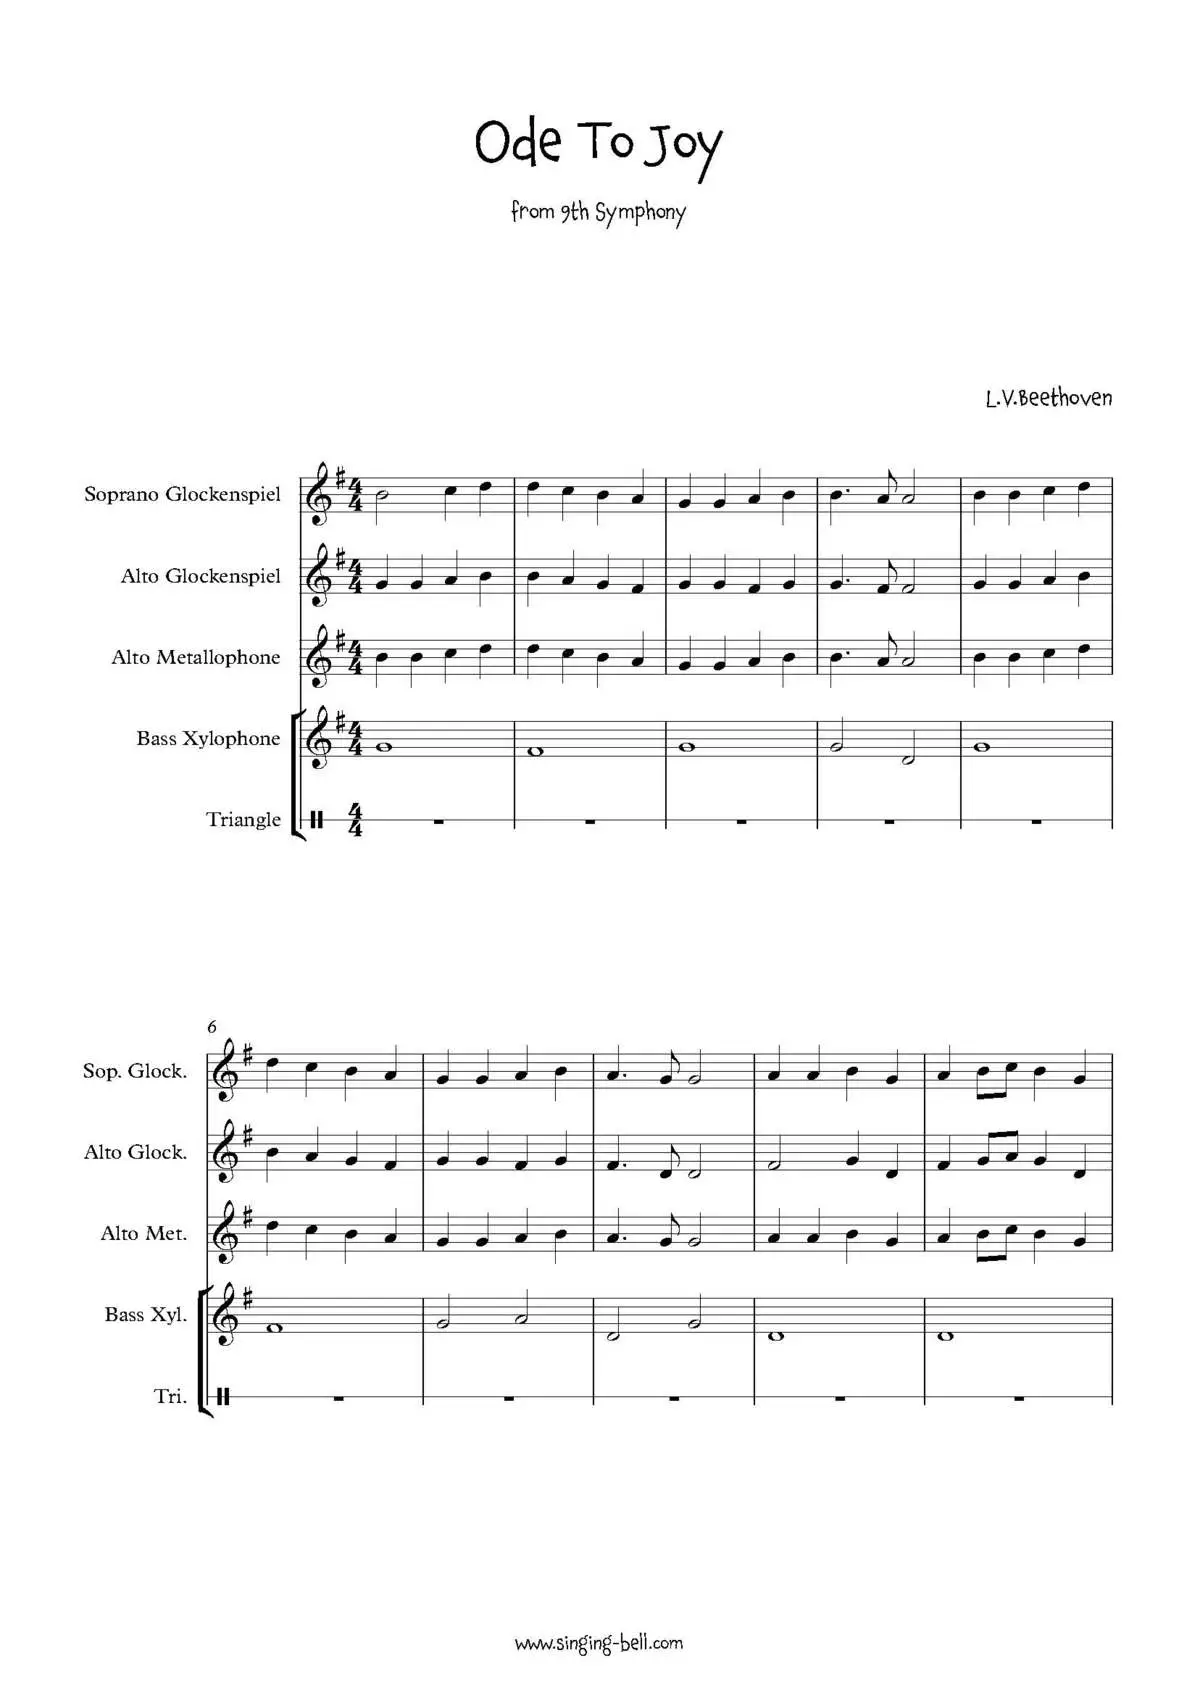 Ode-To-Joy-orff-arrangement-sheet-music-singing-bell_Page_1